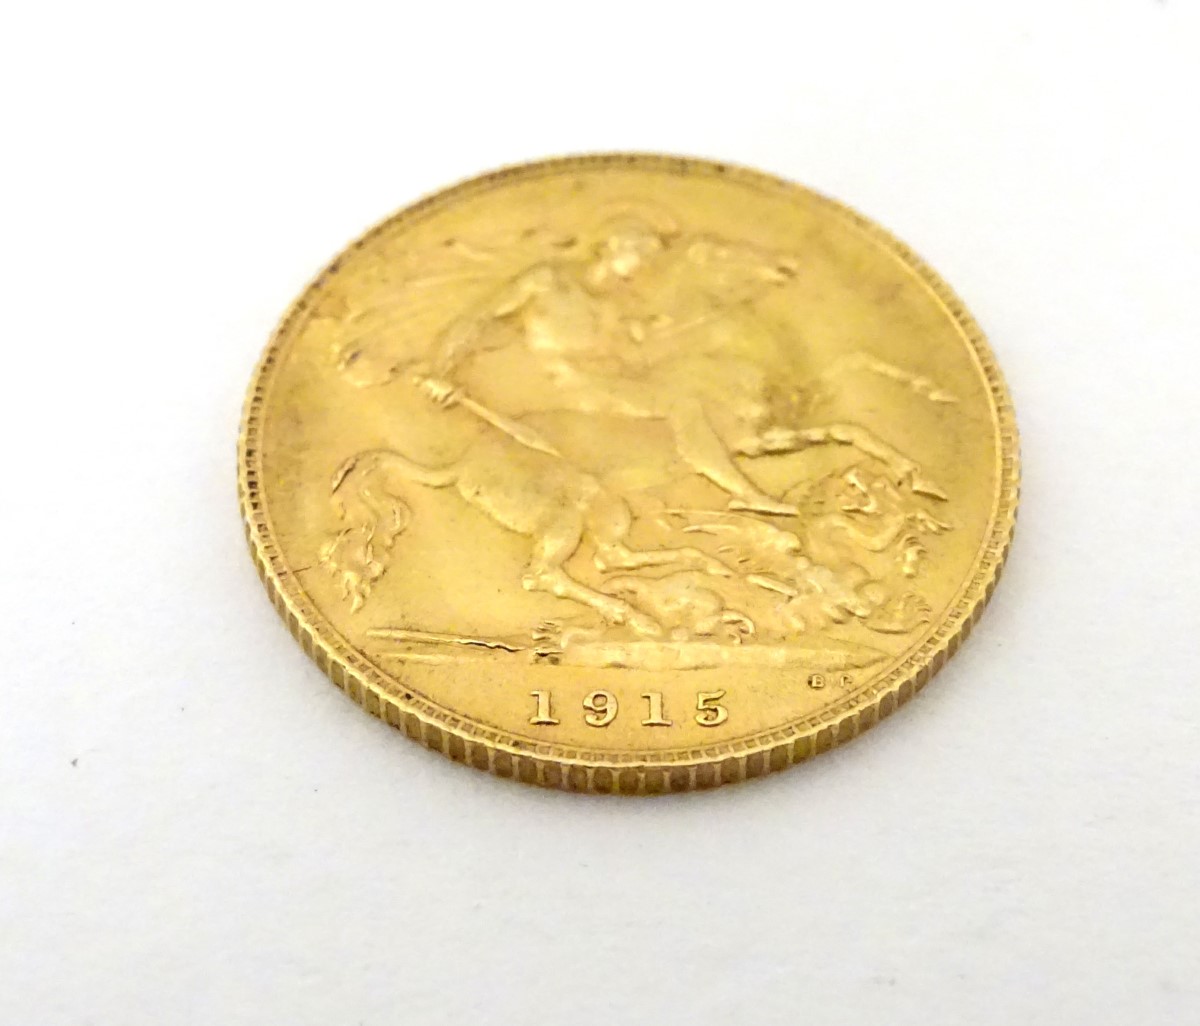 Coin: a 1915 half sovereign, - Image 2 of 3